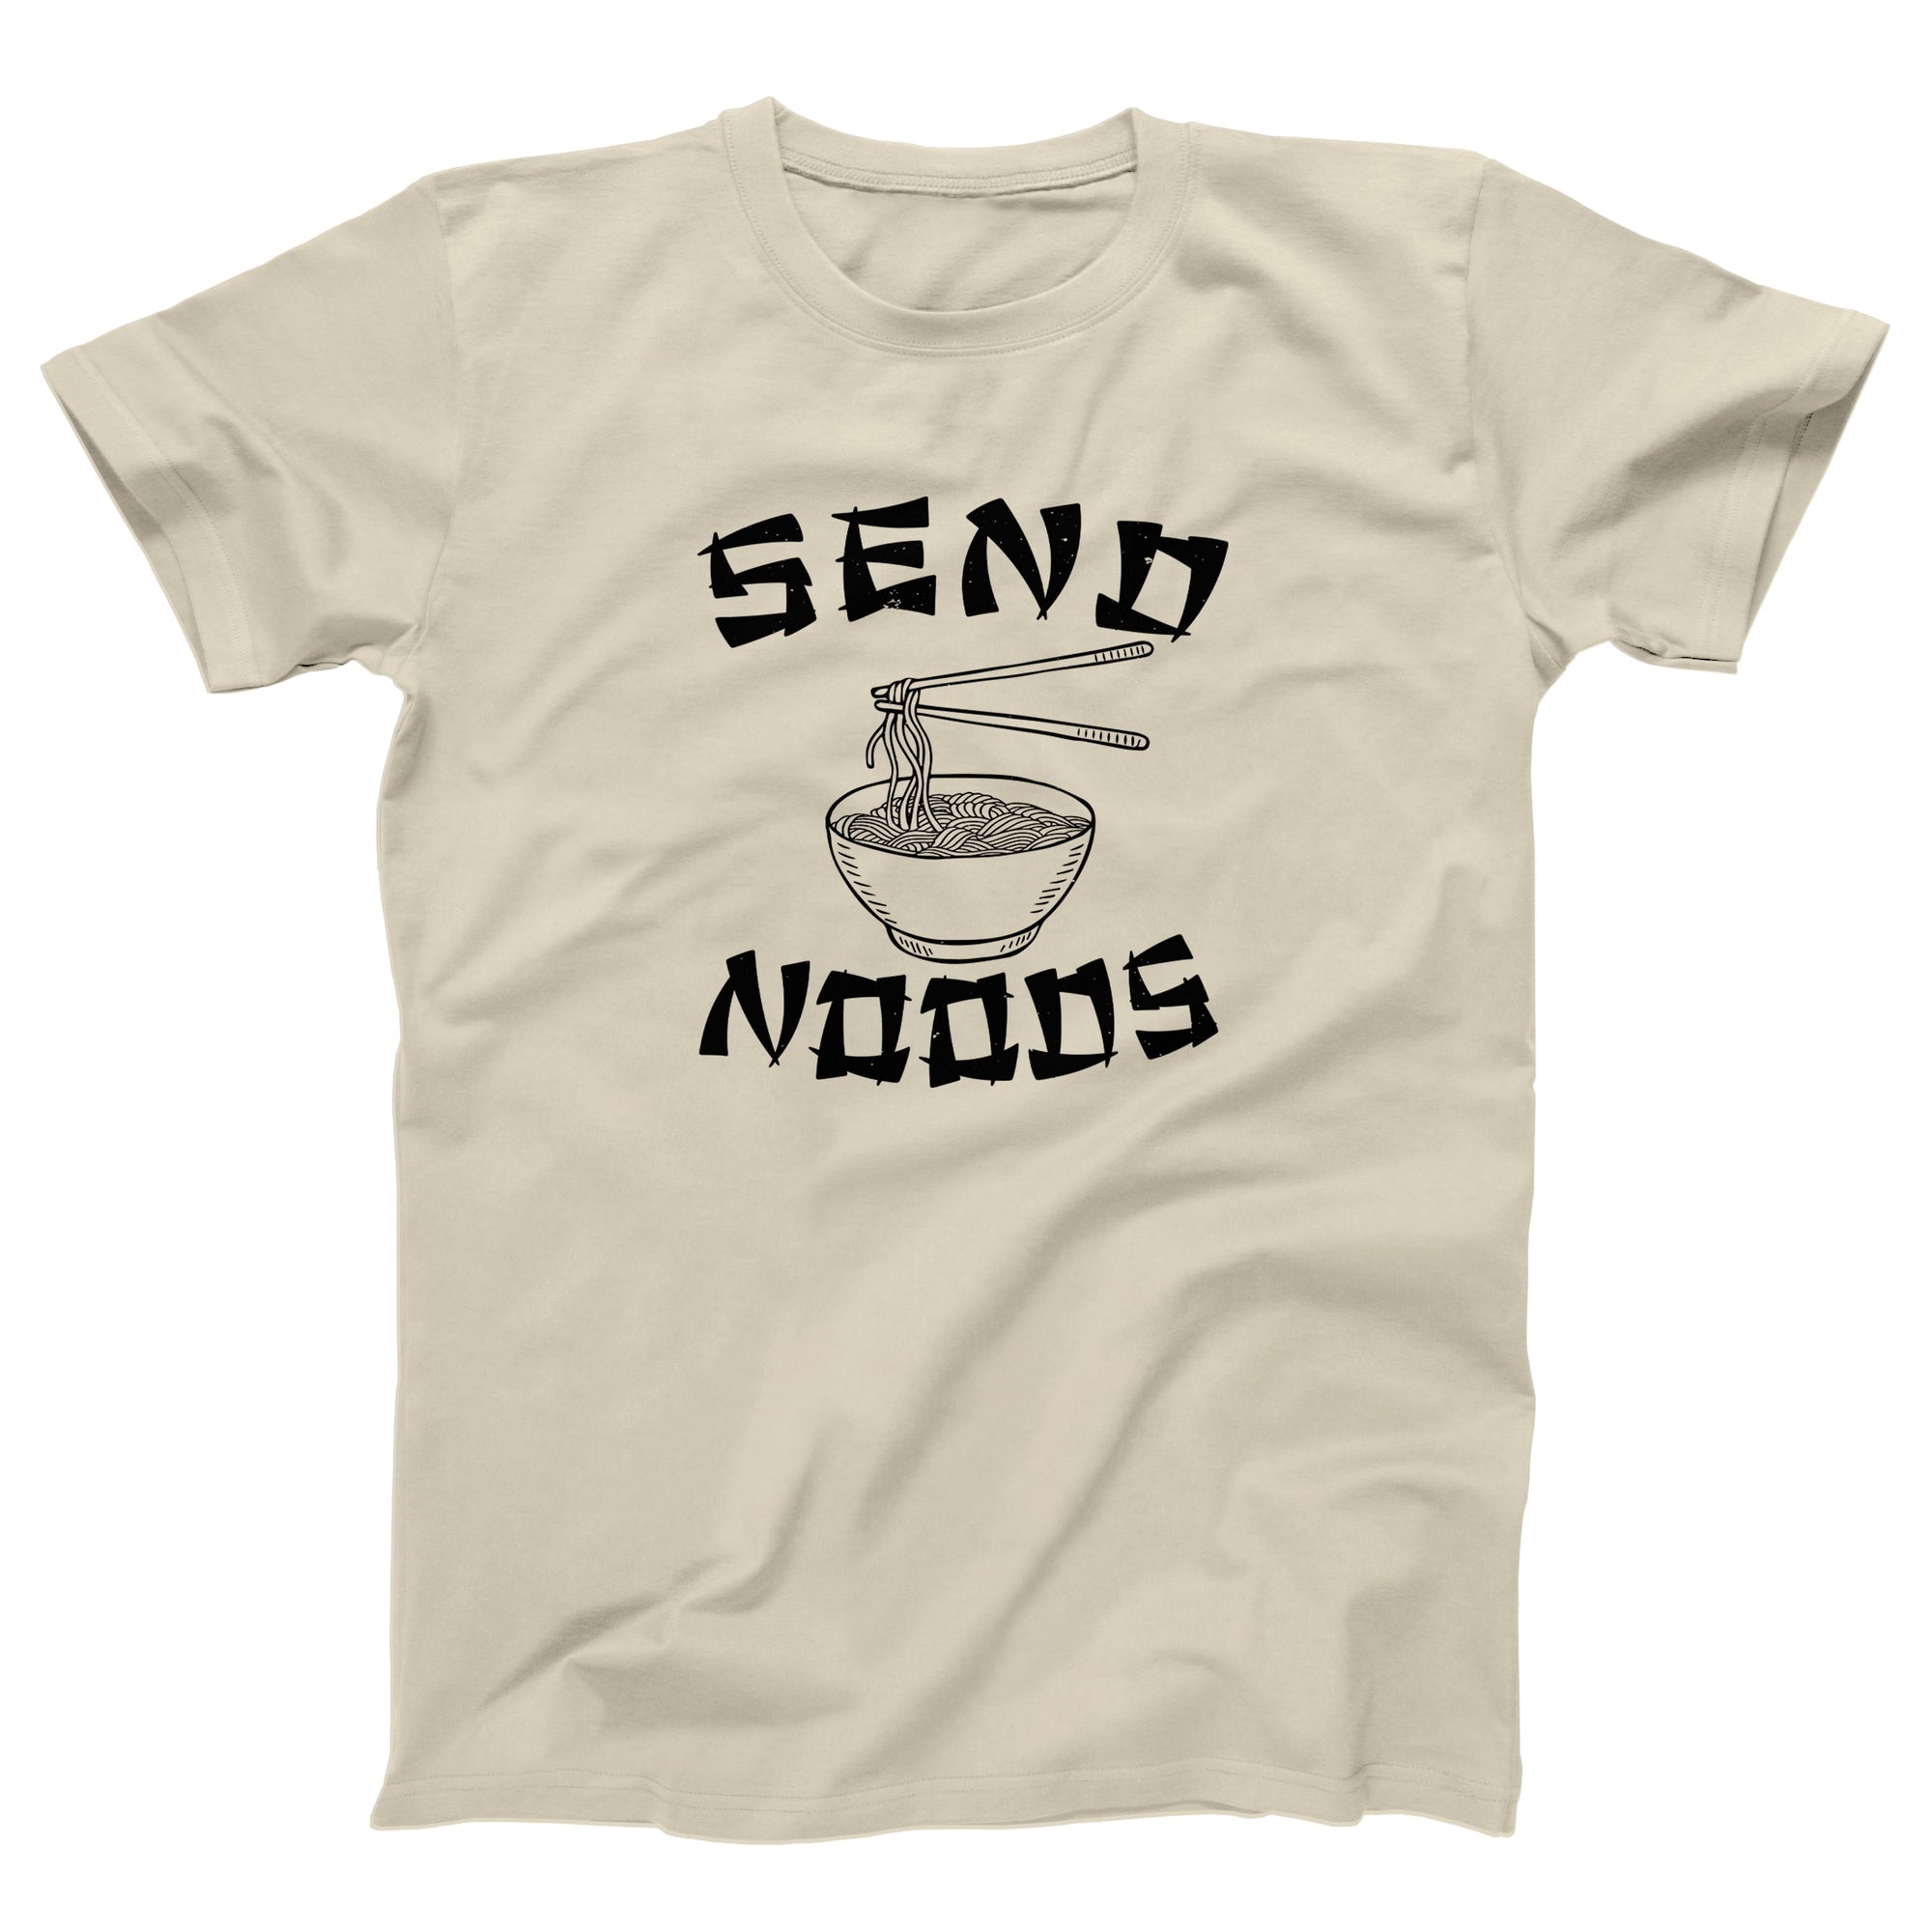 Send Noods Adult Unisex T-Shirt - anishphilip